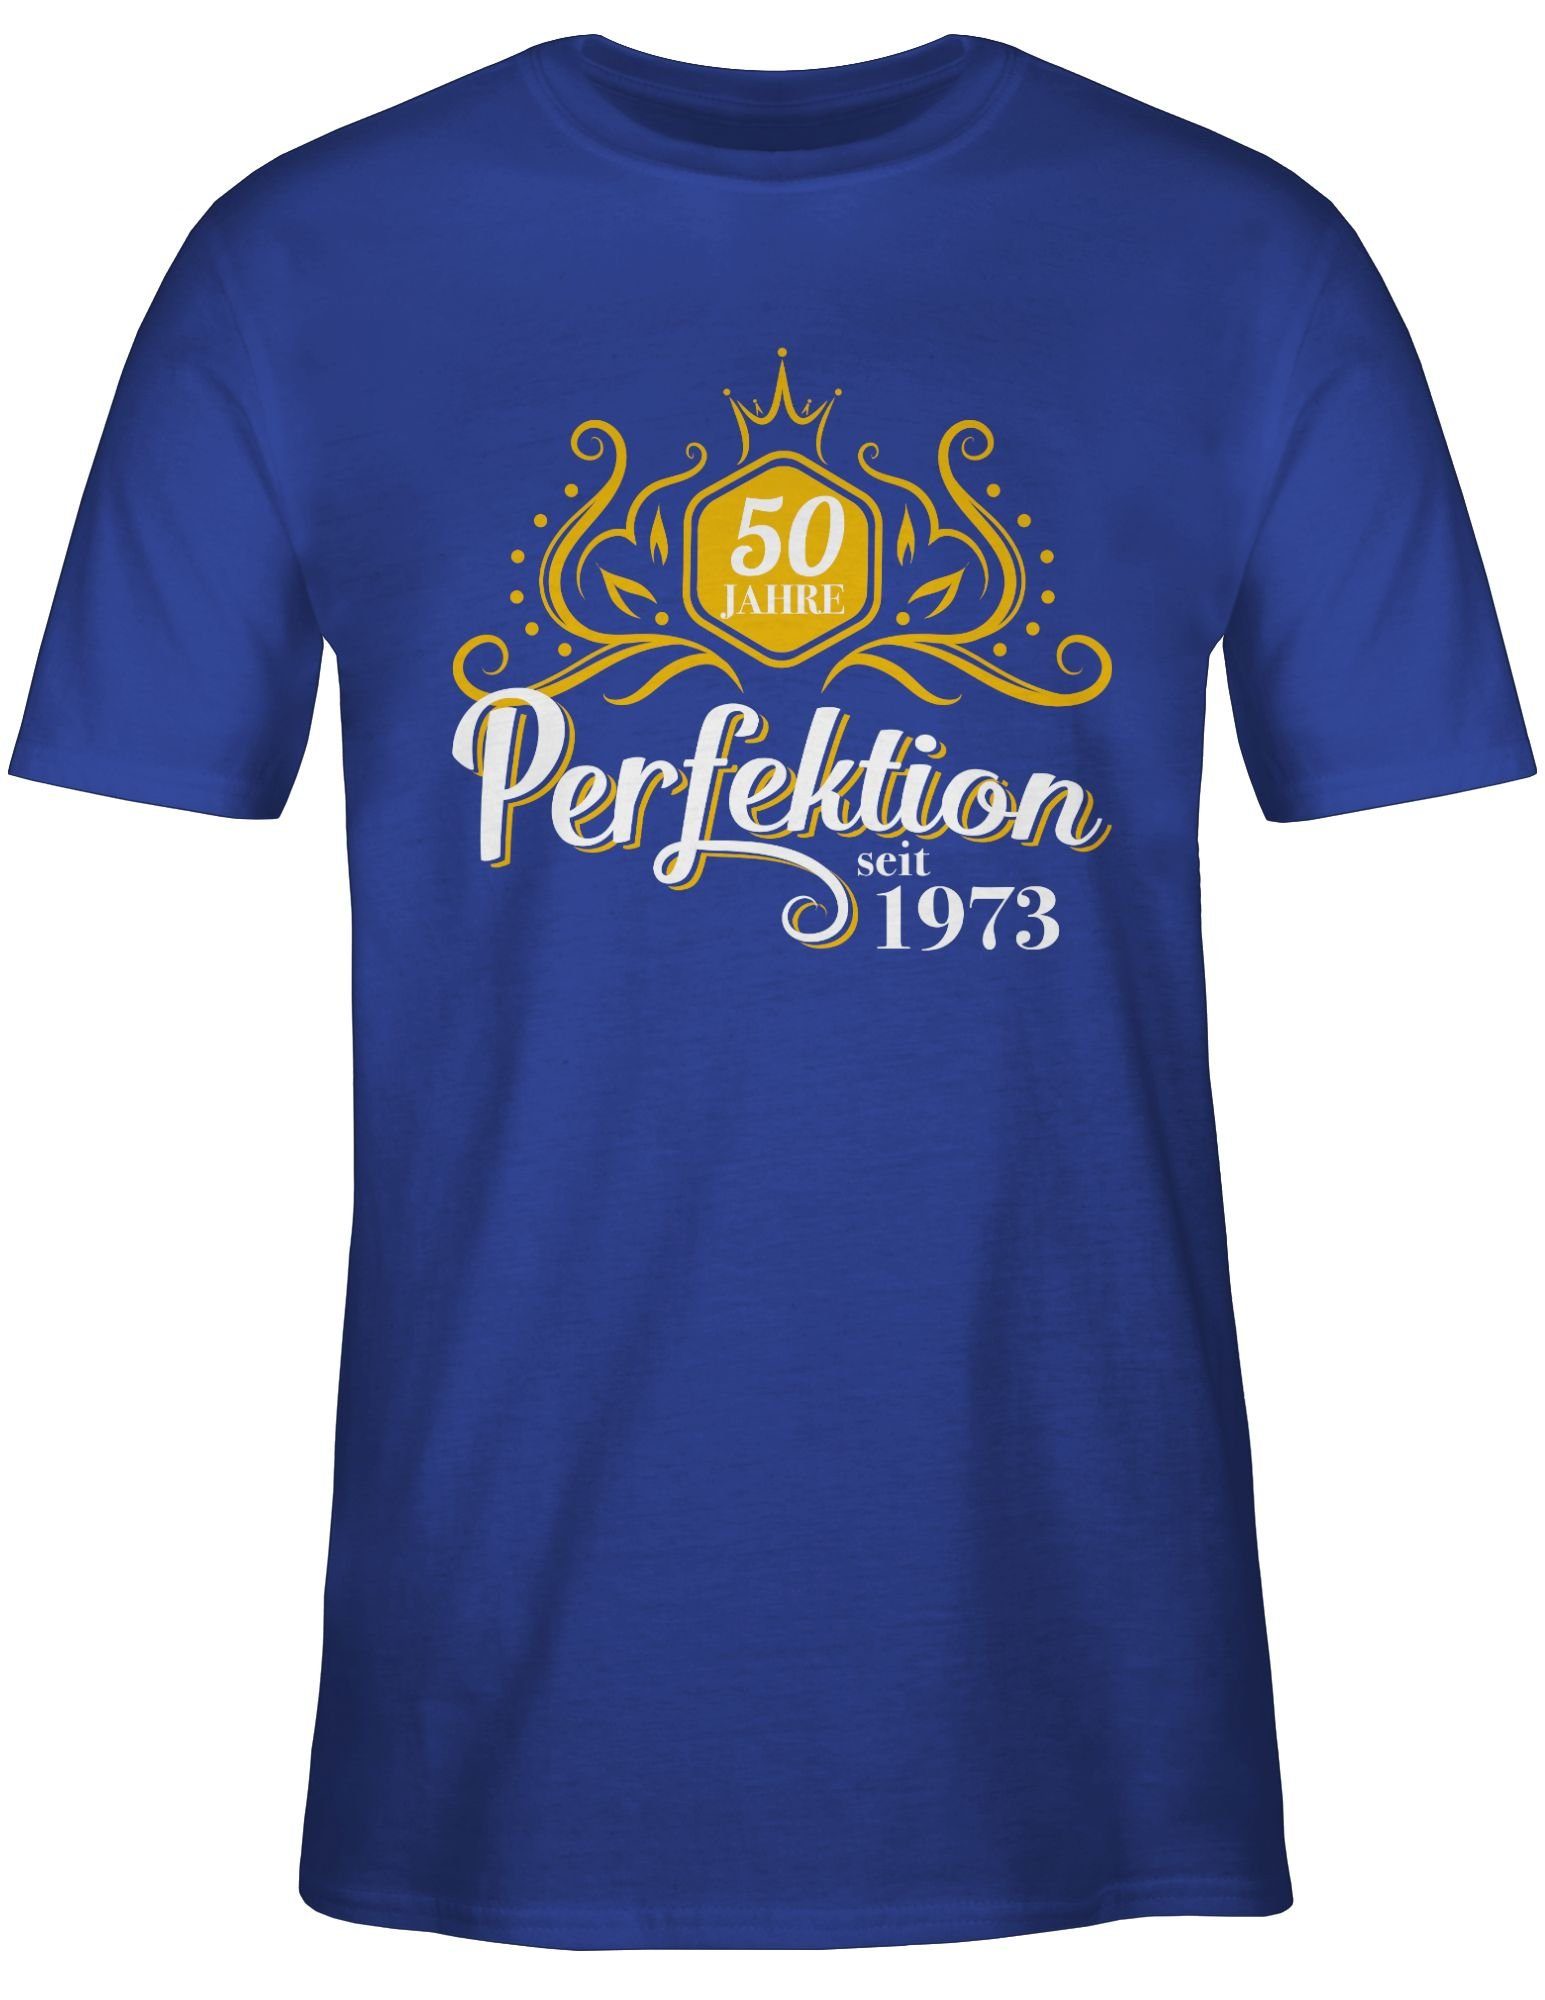 T-Shirt 50. Jahre Perfektion Fünfzig Shirtracer Royalblau 1973 3 Geburtstag